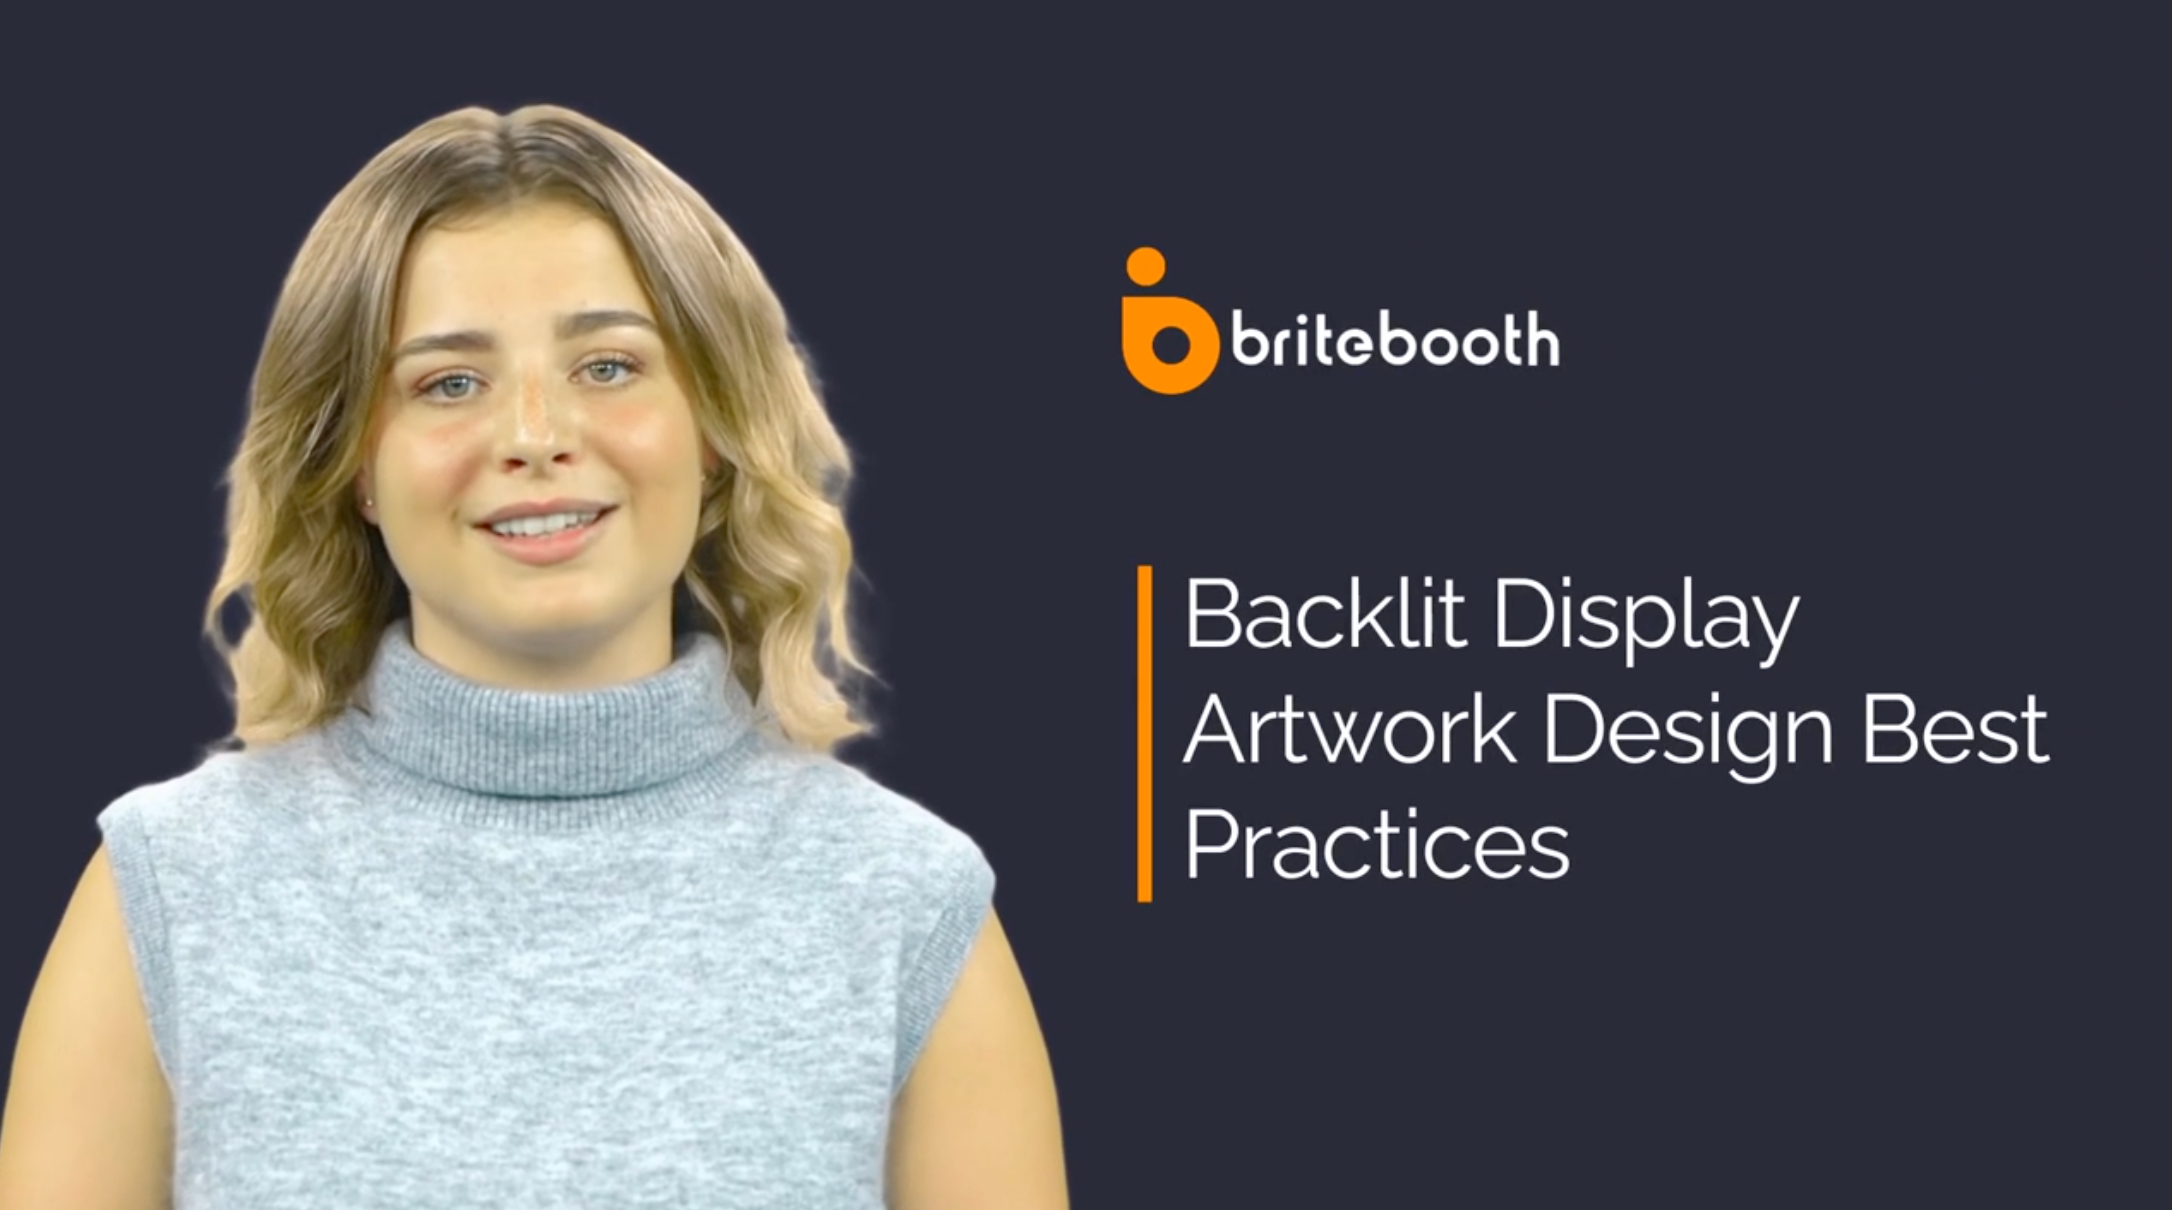 Load video: BriteBooth Artwork Design Best Practices